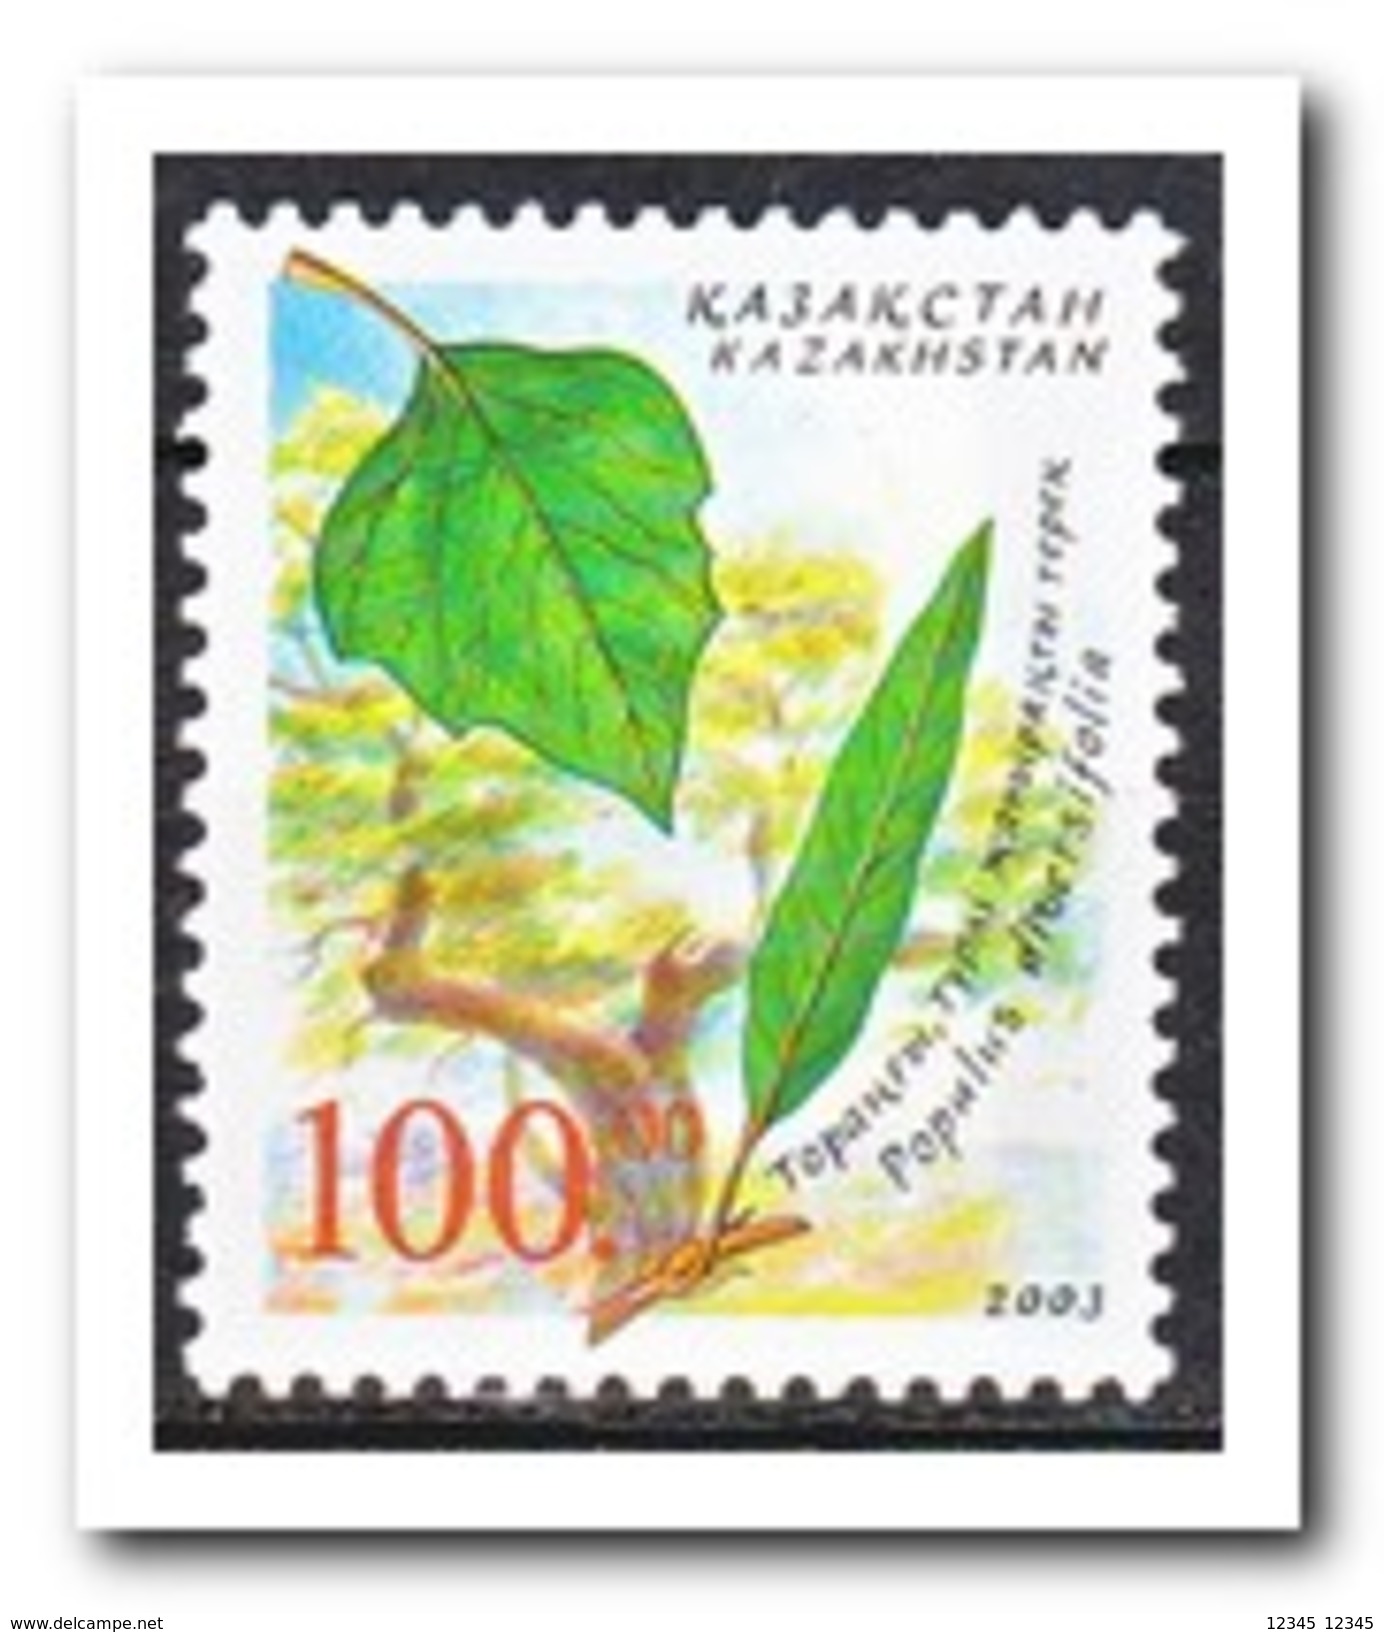 Kazachstan 2003, Postfris MNH, Trees - Kazachstan